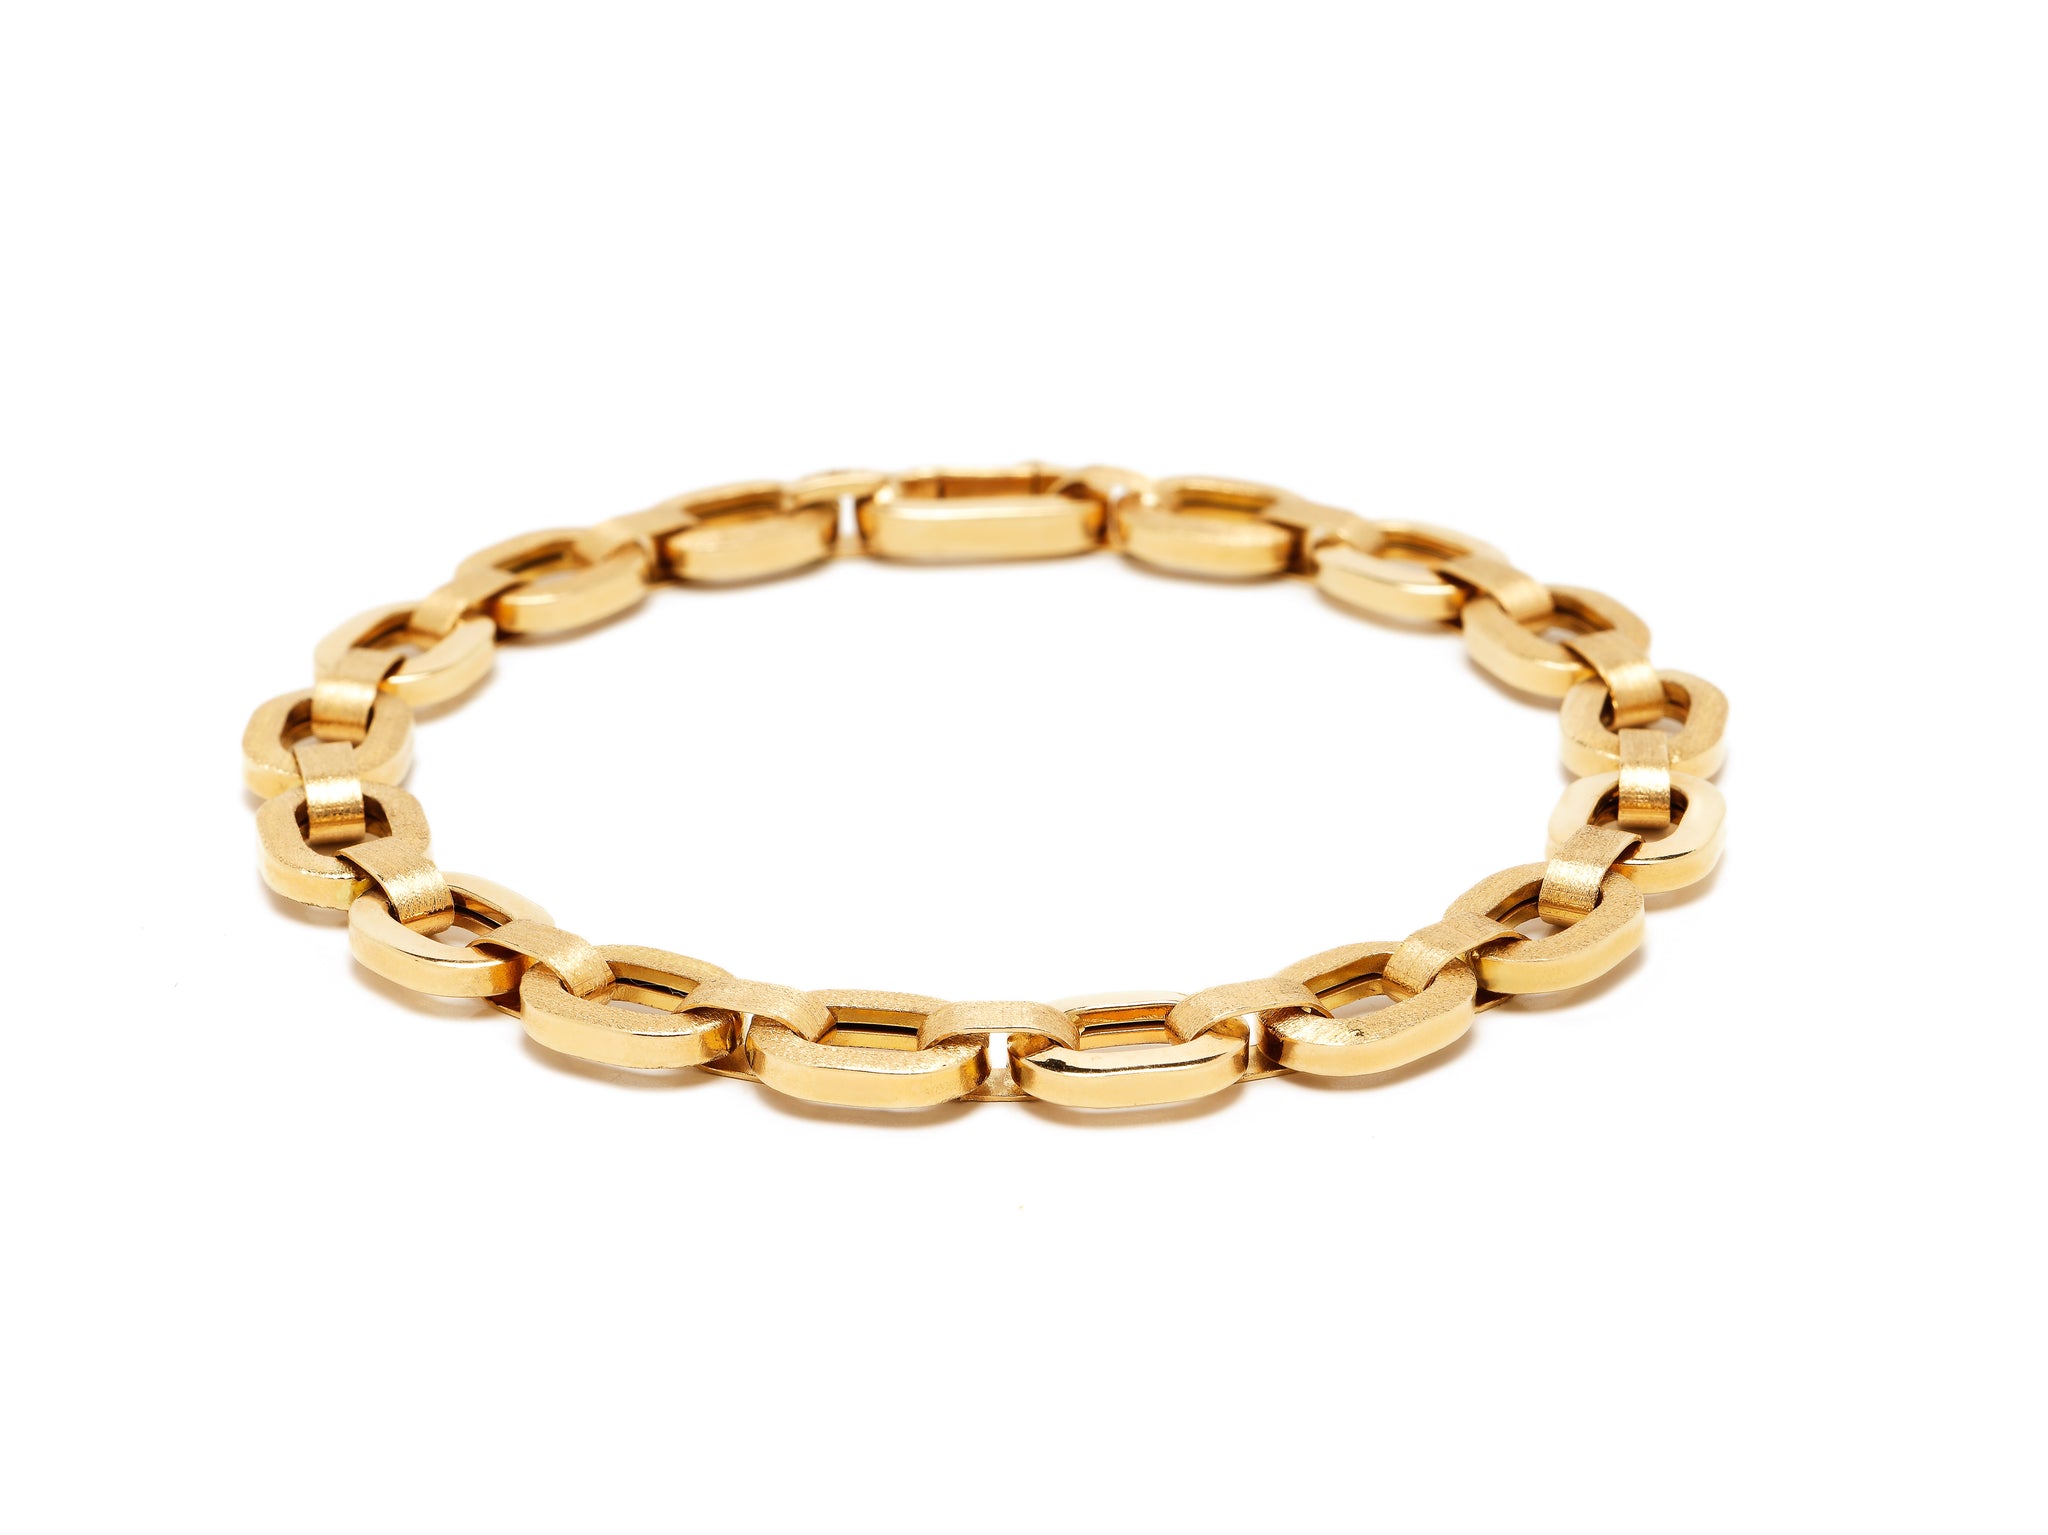 18 krt yellow gold satin and polished link bracelet